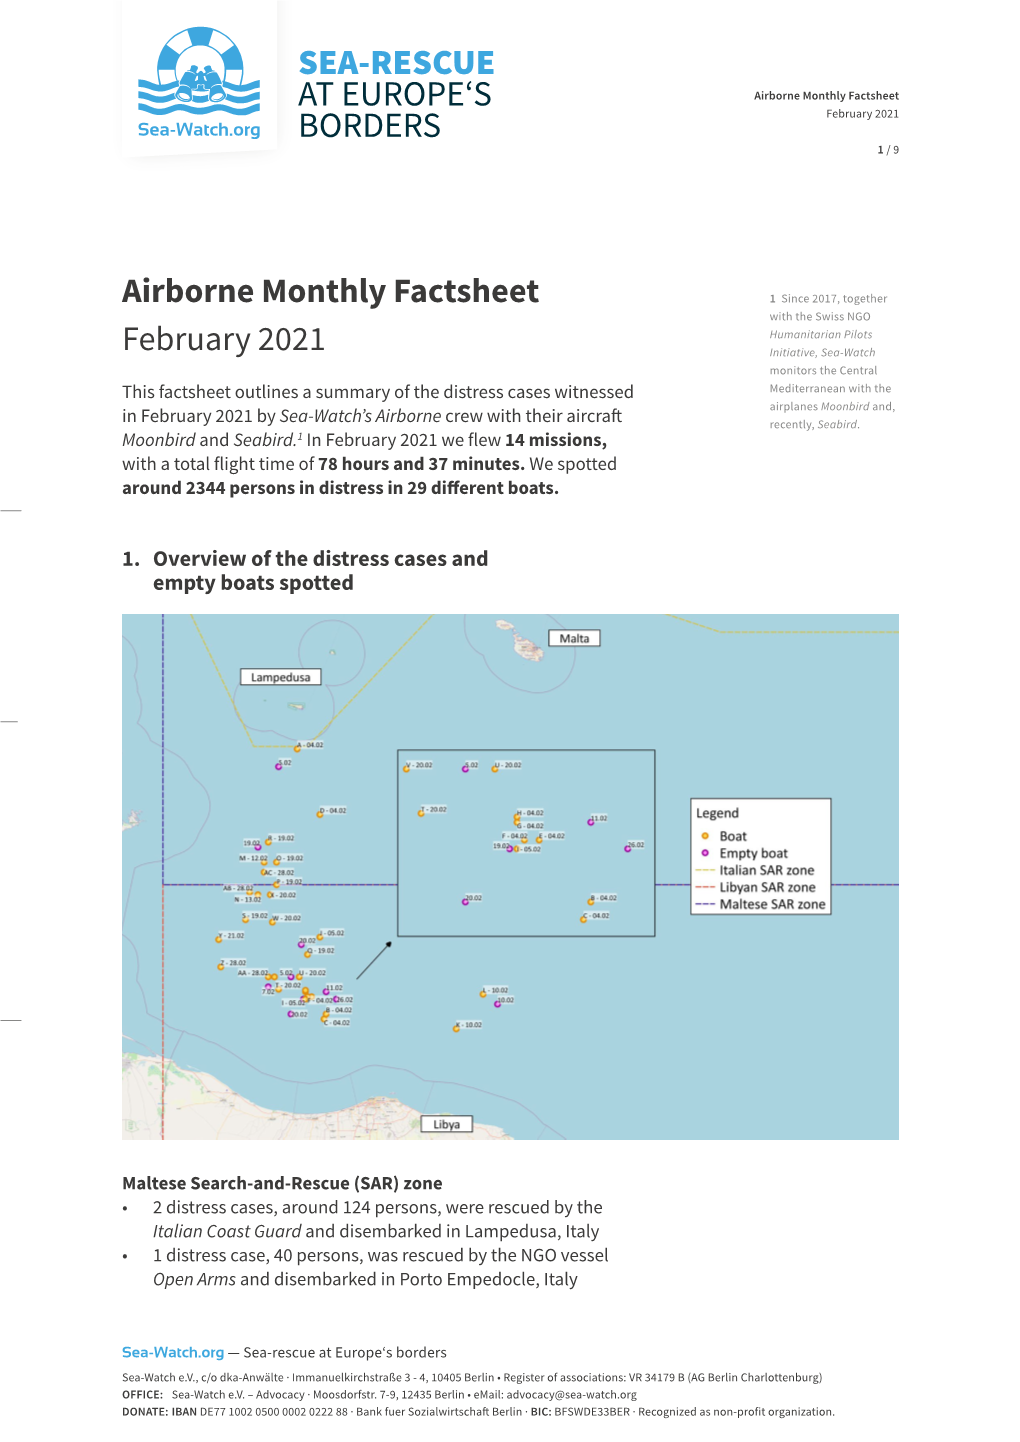 Airborne Monthly Factsheet February 2021